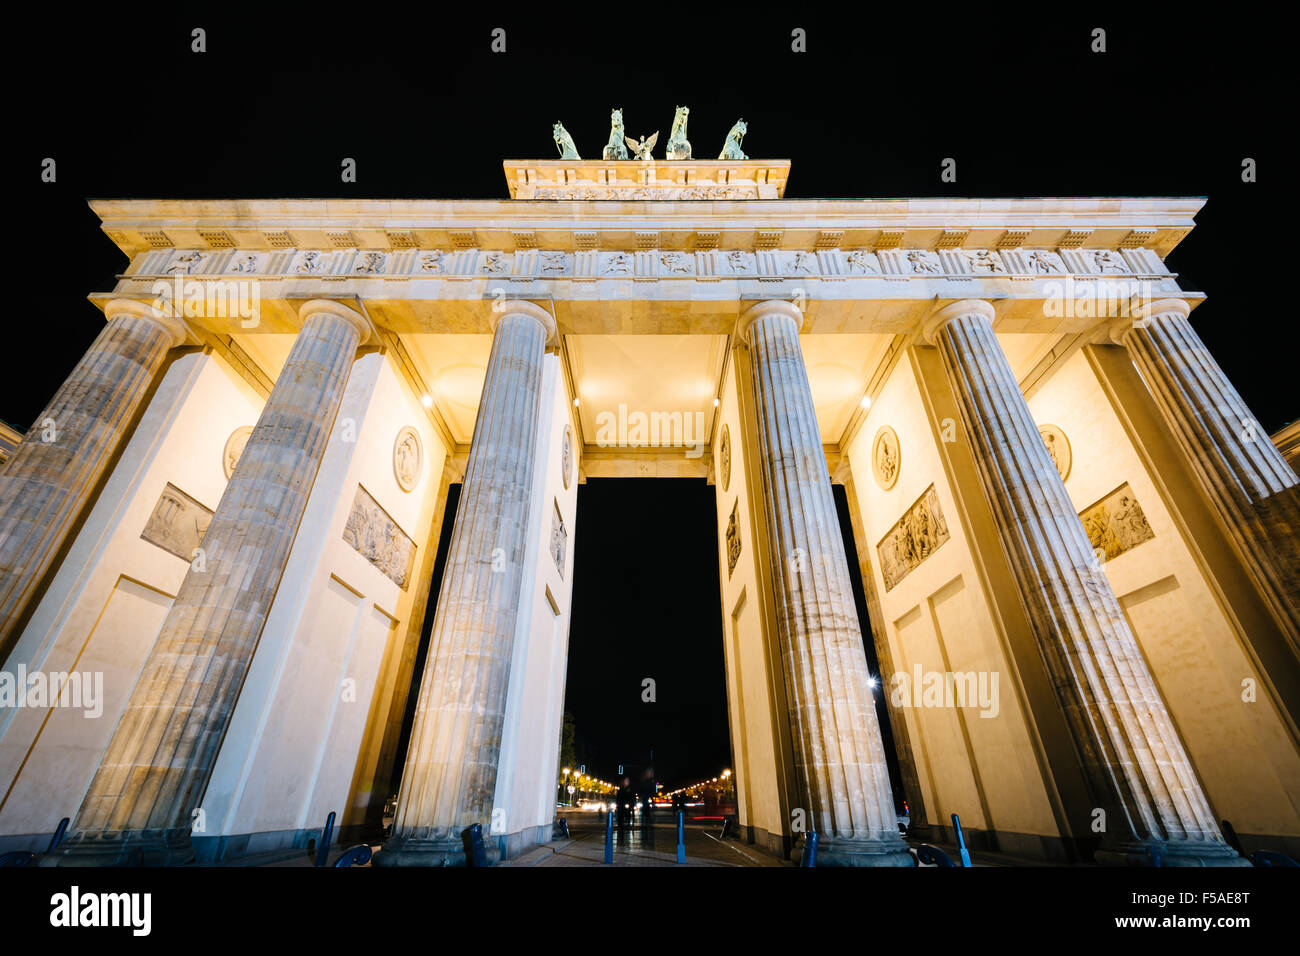 The Brandenburg Gate at night, in Berlin, Germany. Stock Photo